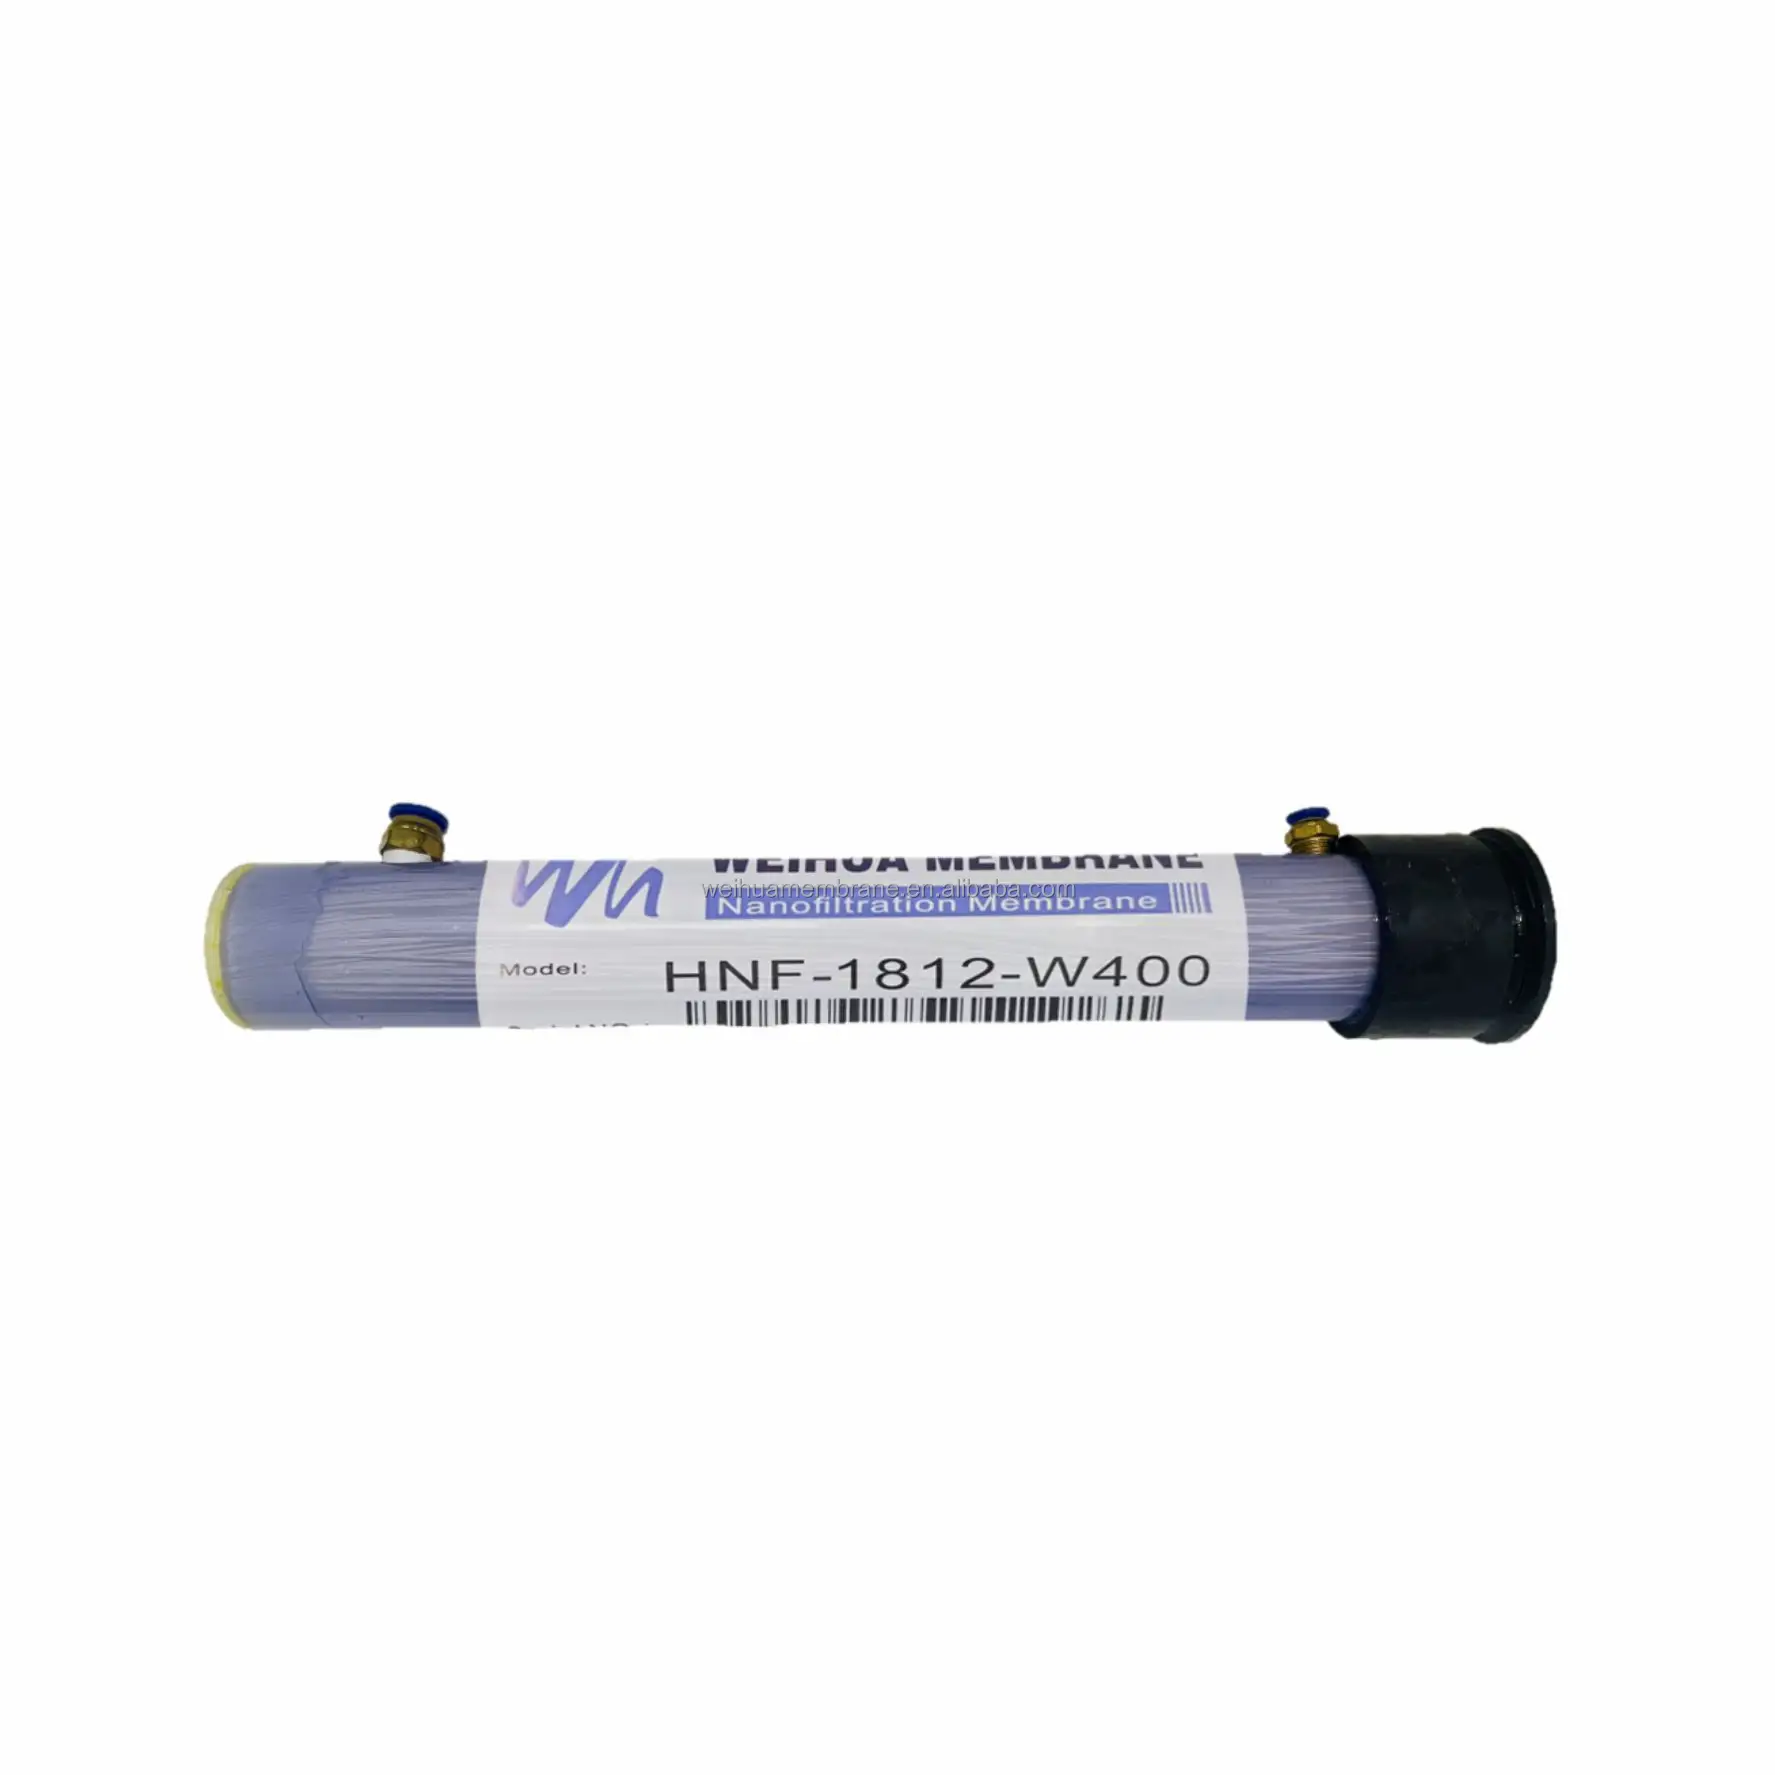 HNF-1812-W400 Hollow Fiber NF membrane High chlorine resistance desalination industrial water treatment